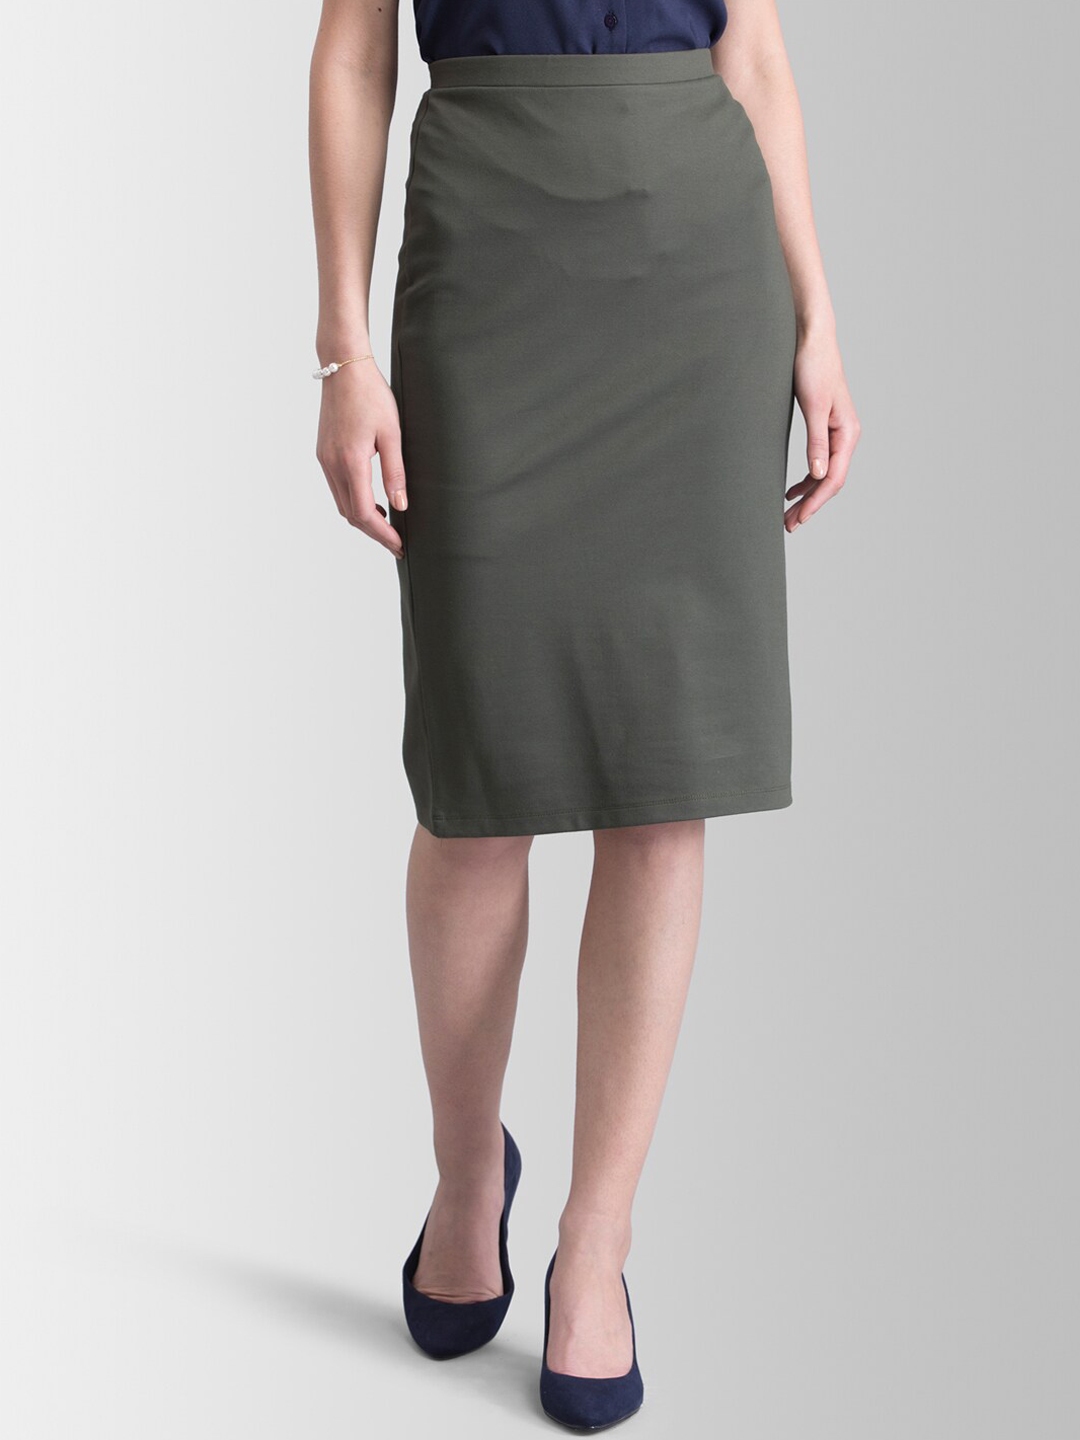 Buy FableStreet Olive Green Knitted Pencil Skirt - Skirts for Women ...